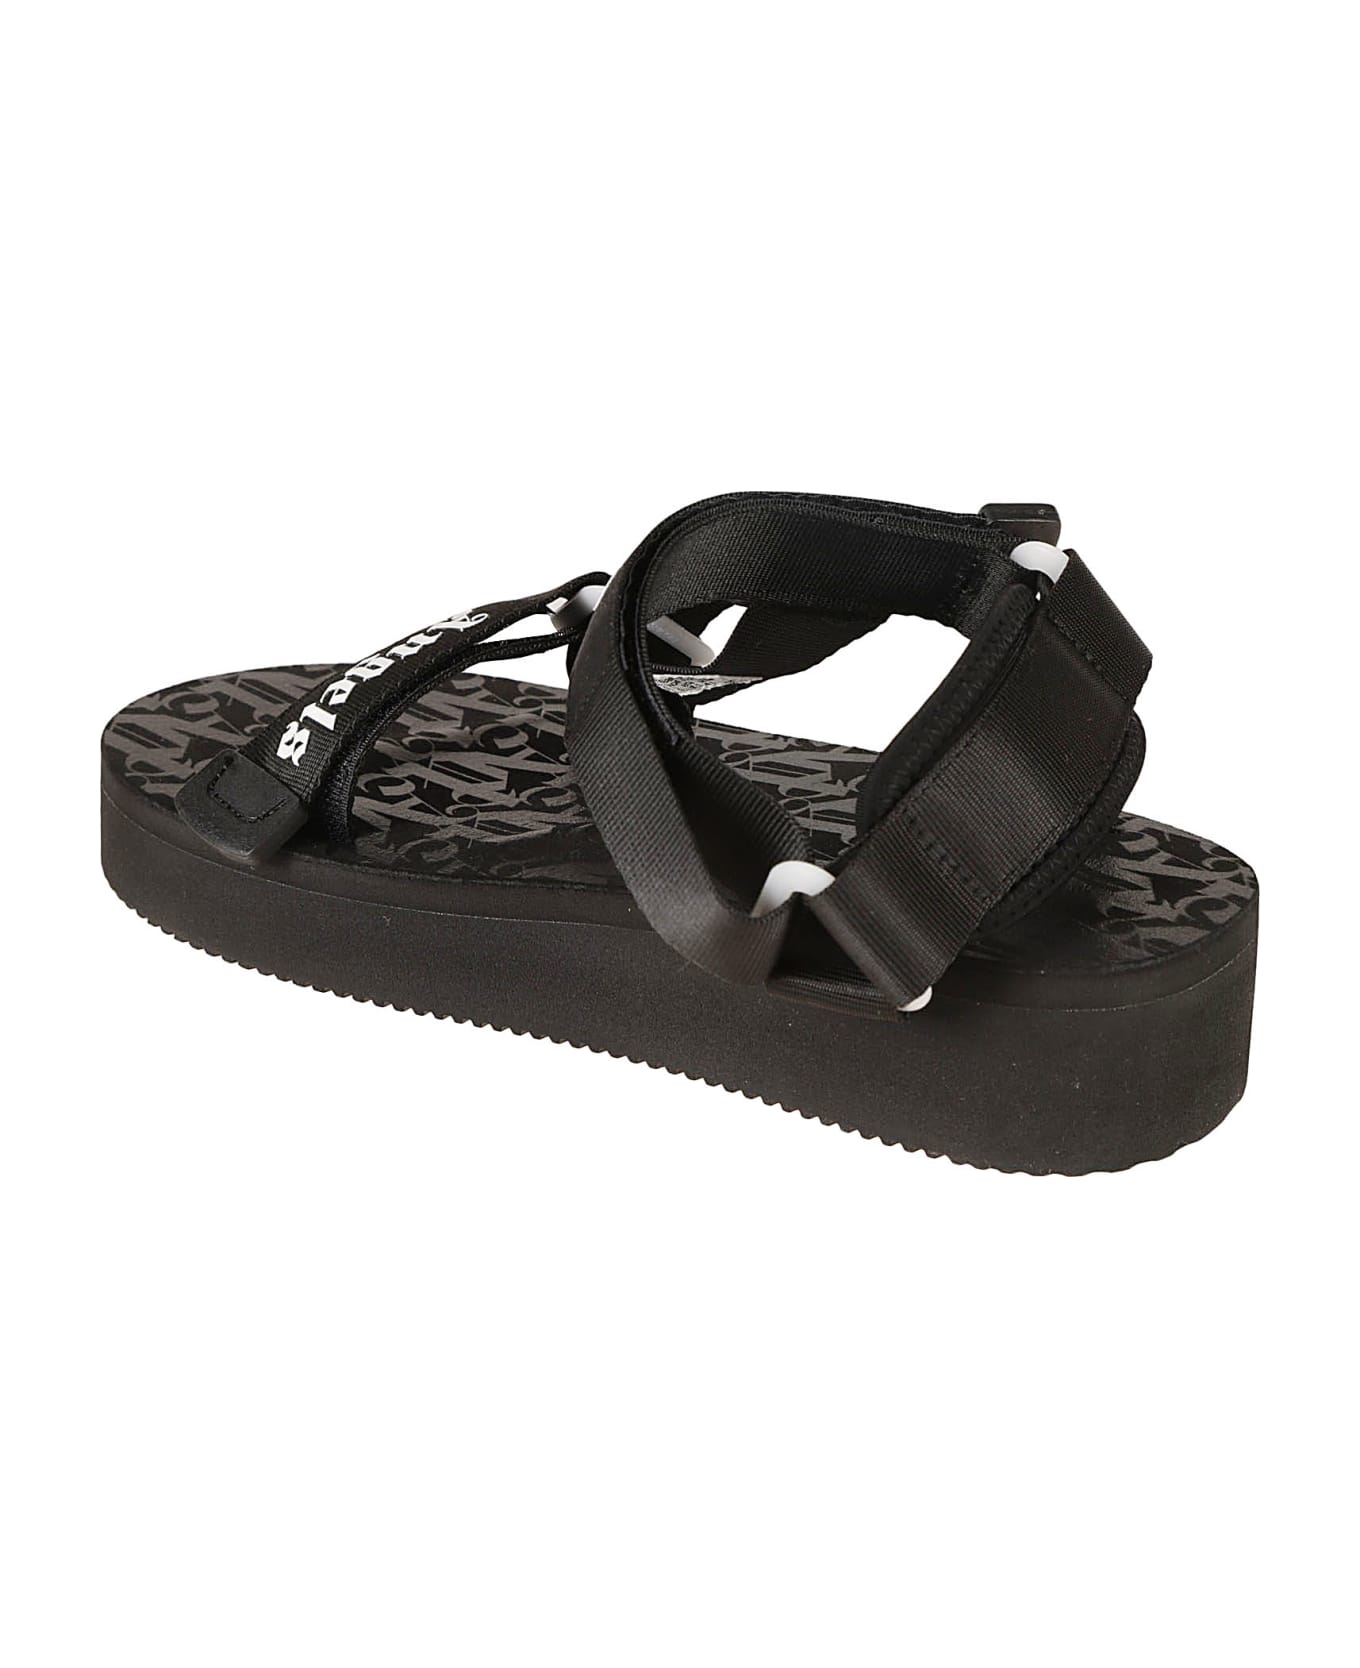 Palm Angels X Suicoke Depa Sandals - BLACK WHITE (Black)